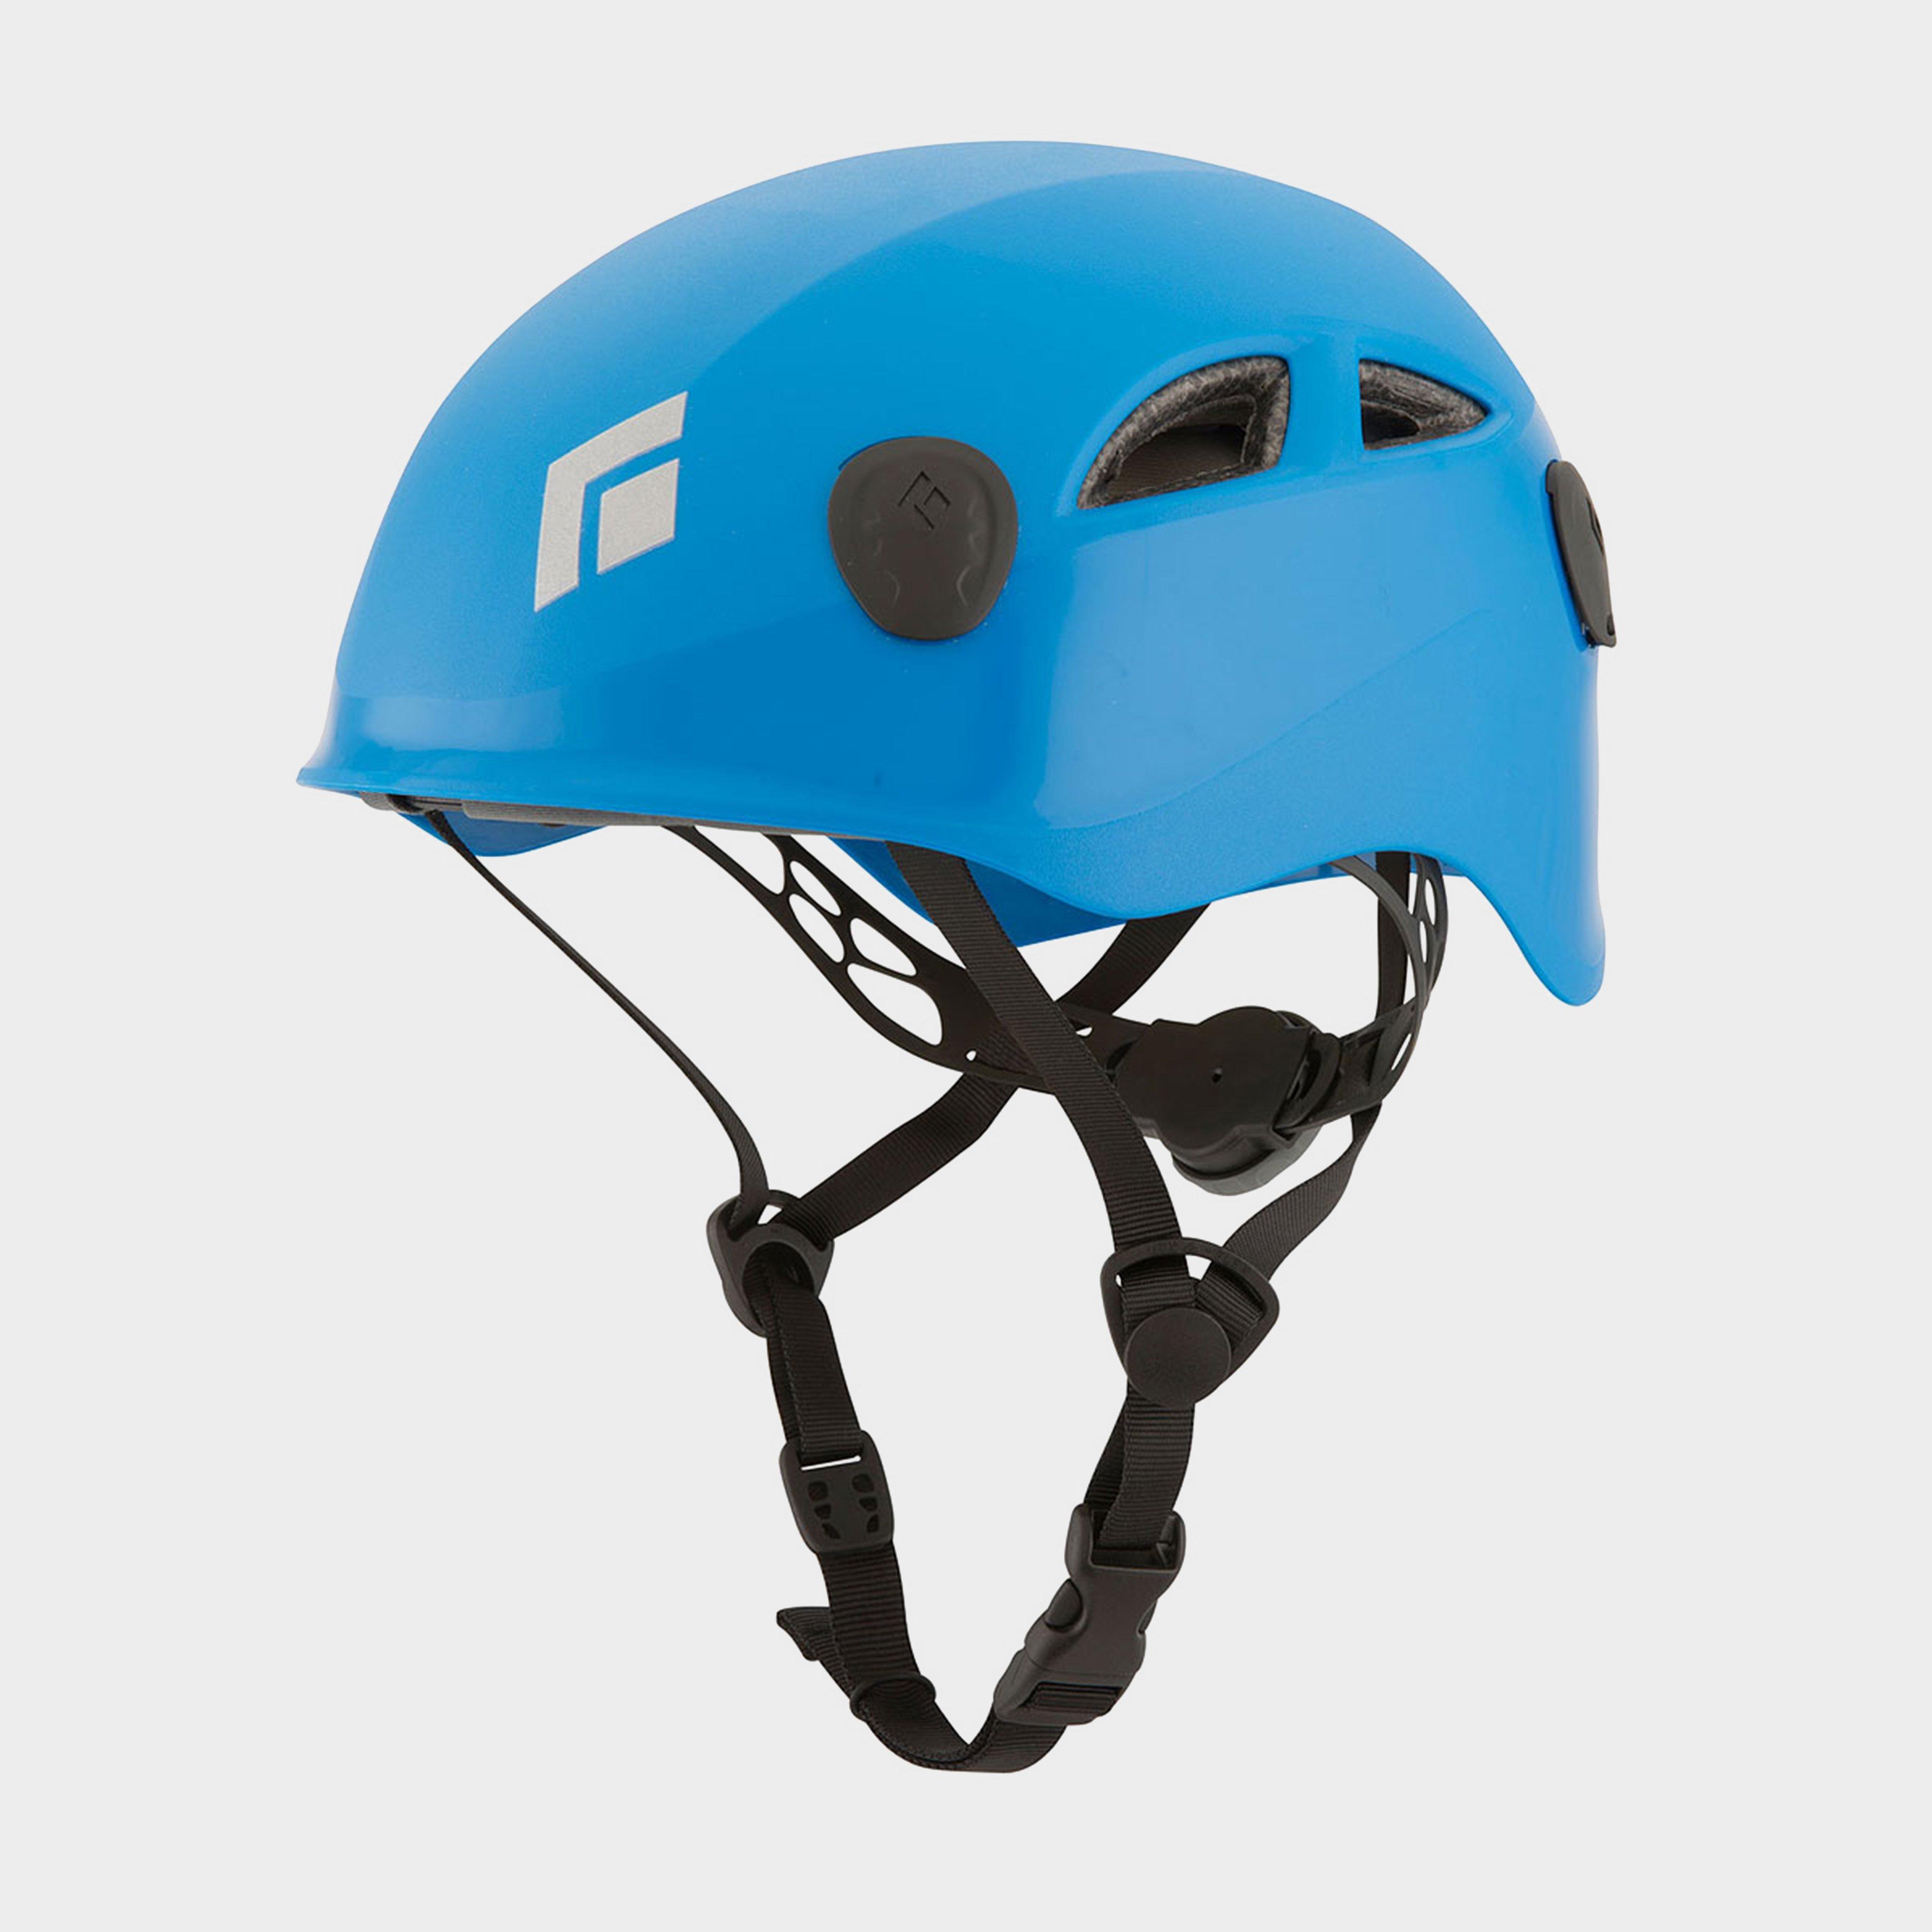 Photos - Climbing Gear Black Diamond Half Dome Helmet, Blue 